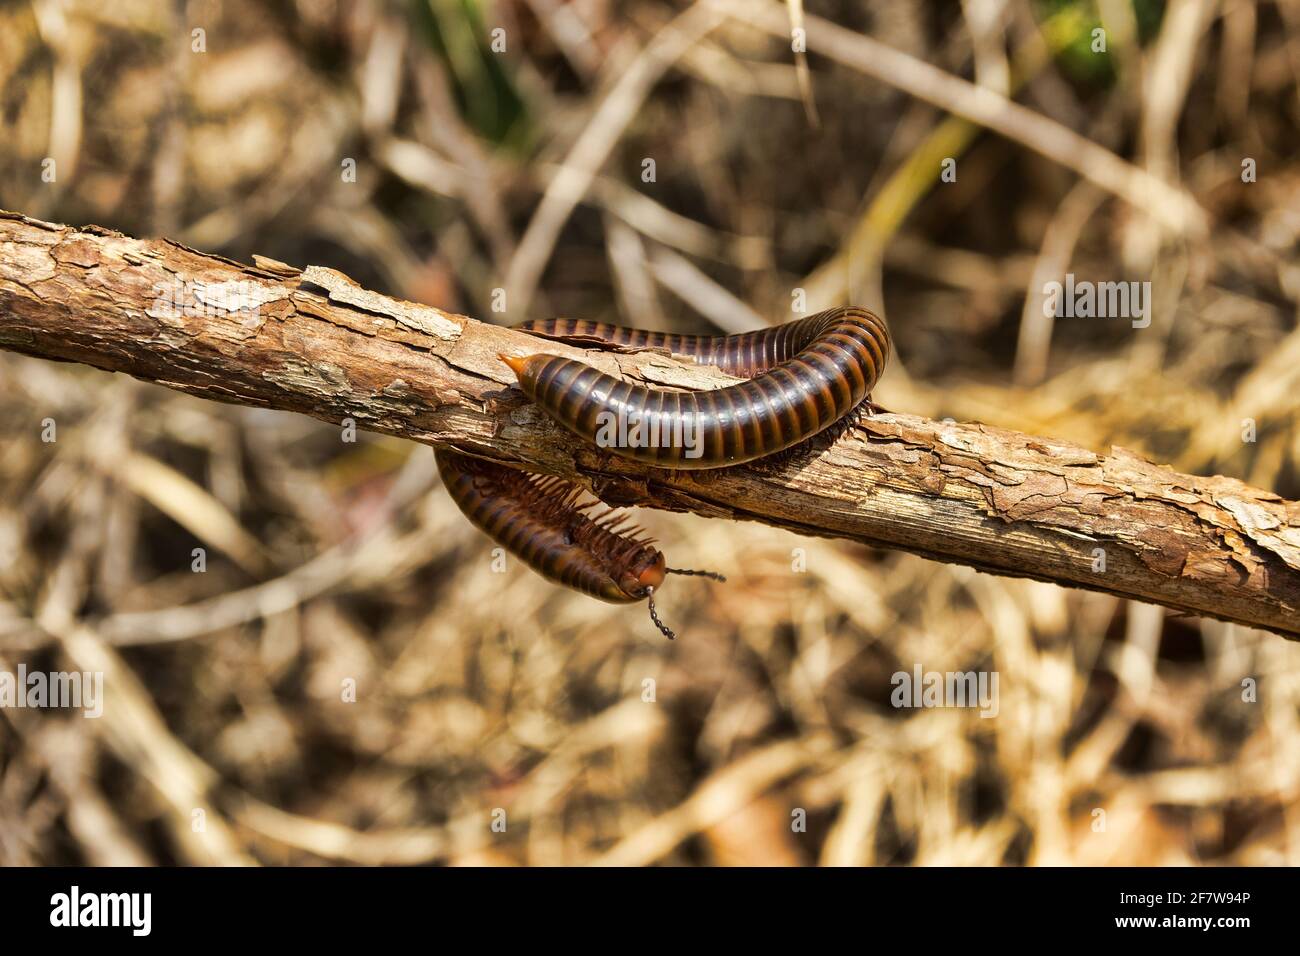 Millipede Spirostreptida, Parilis from the coastal rainforest of Thailand. February Stock Photo